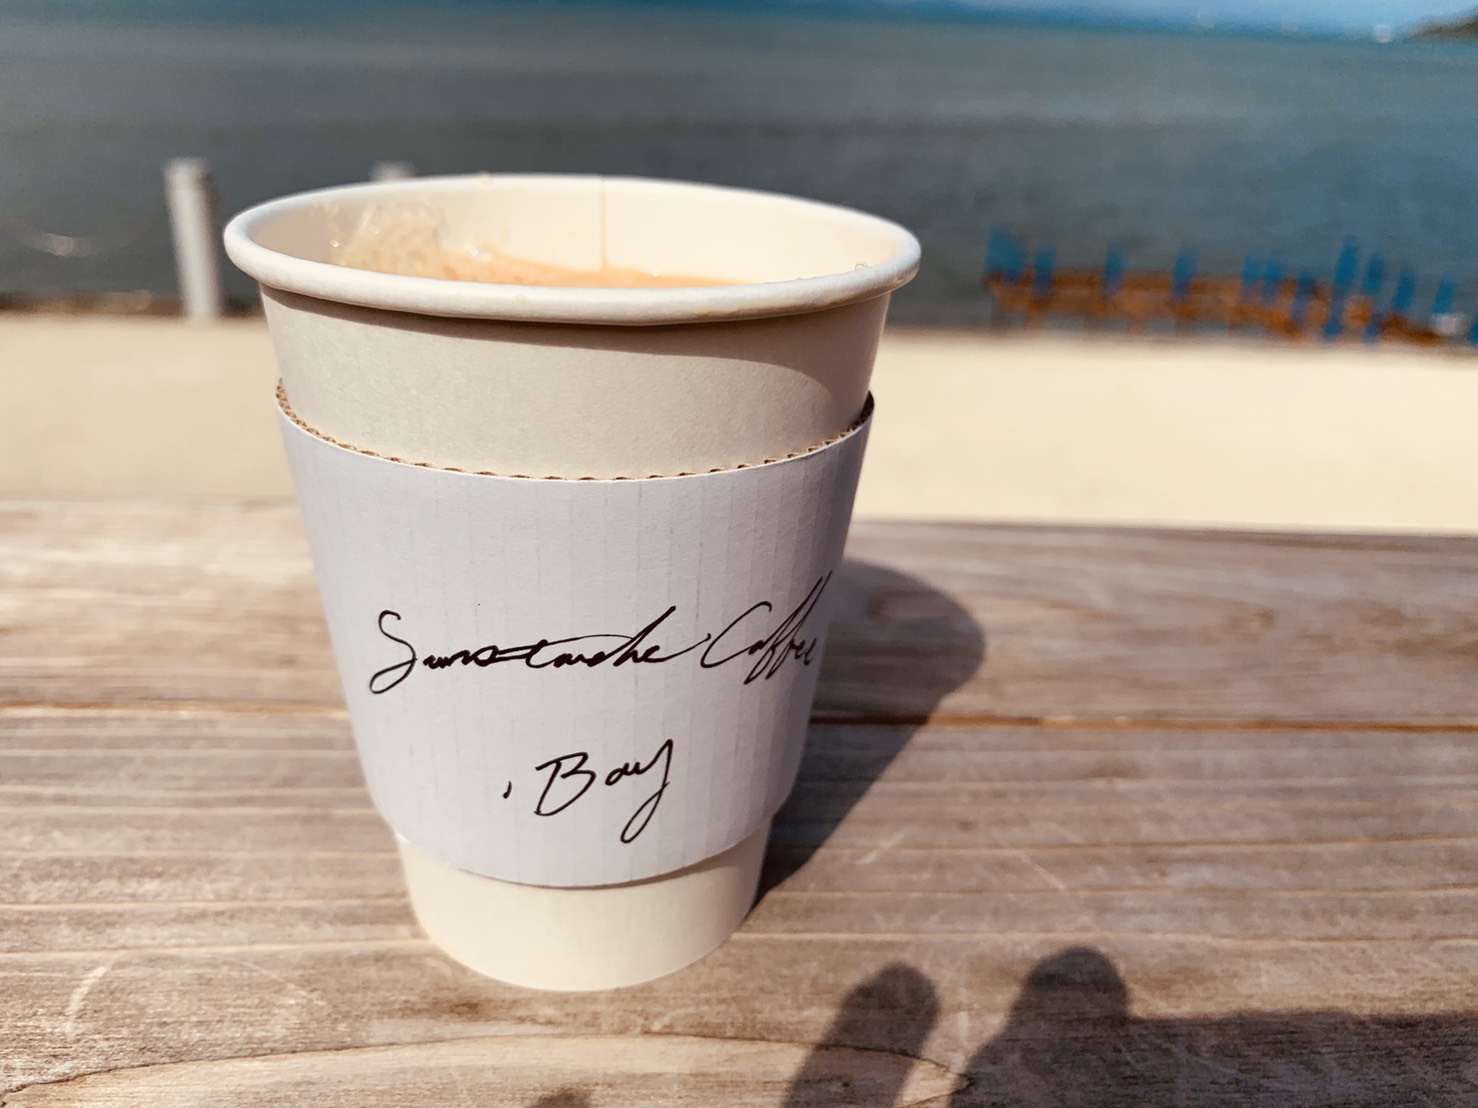 Sunstache Coffee Bay